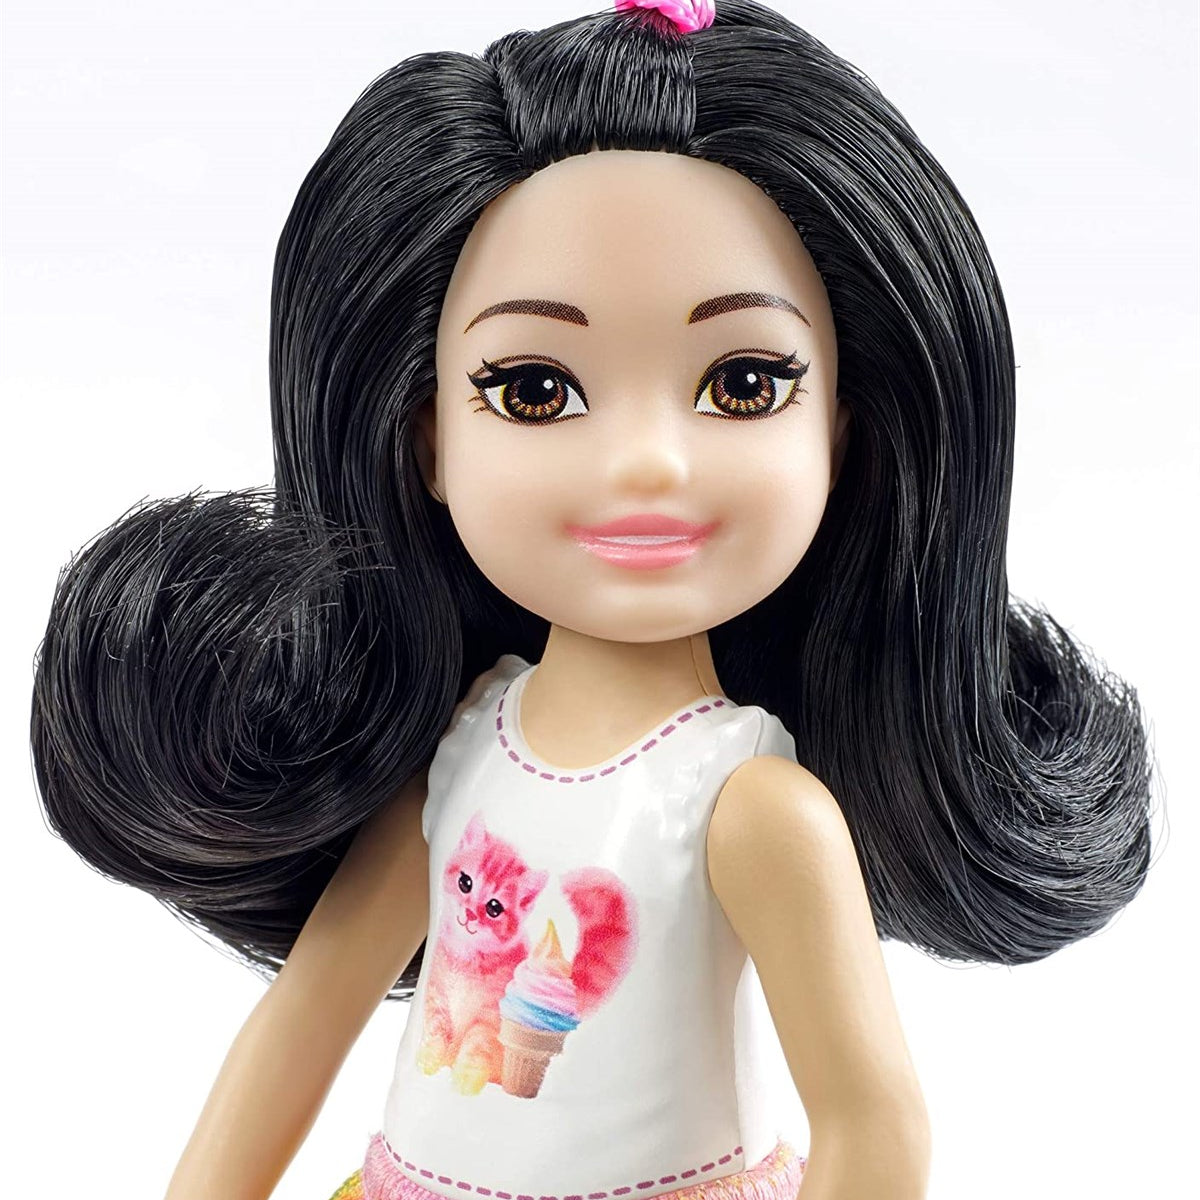 Barbie Club Chelsea Bebek DWJ33-FXG77 | Toysall